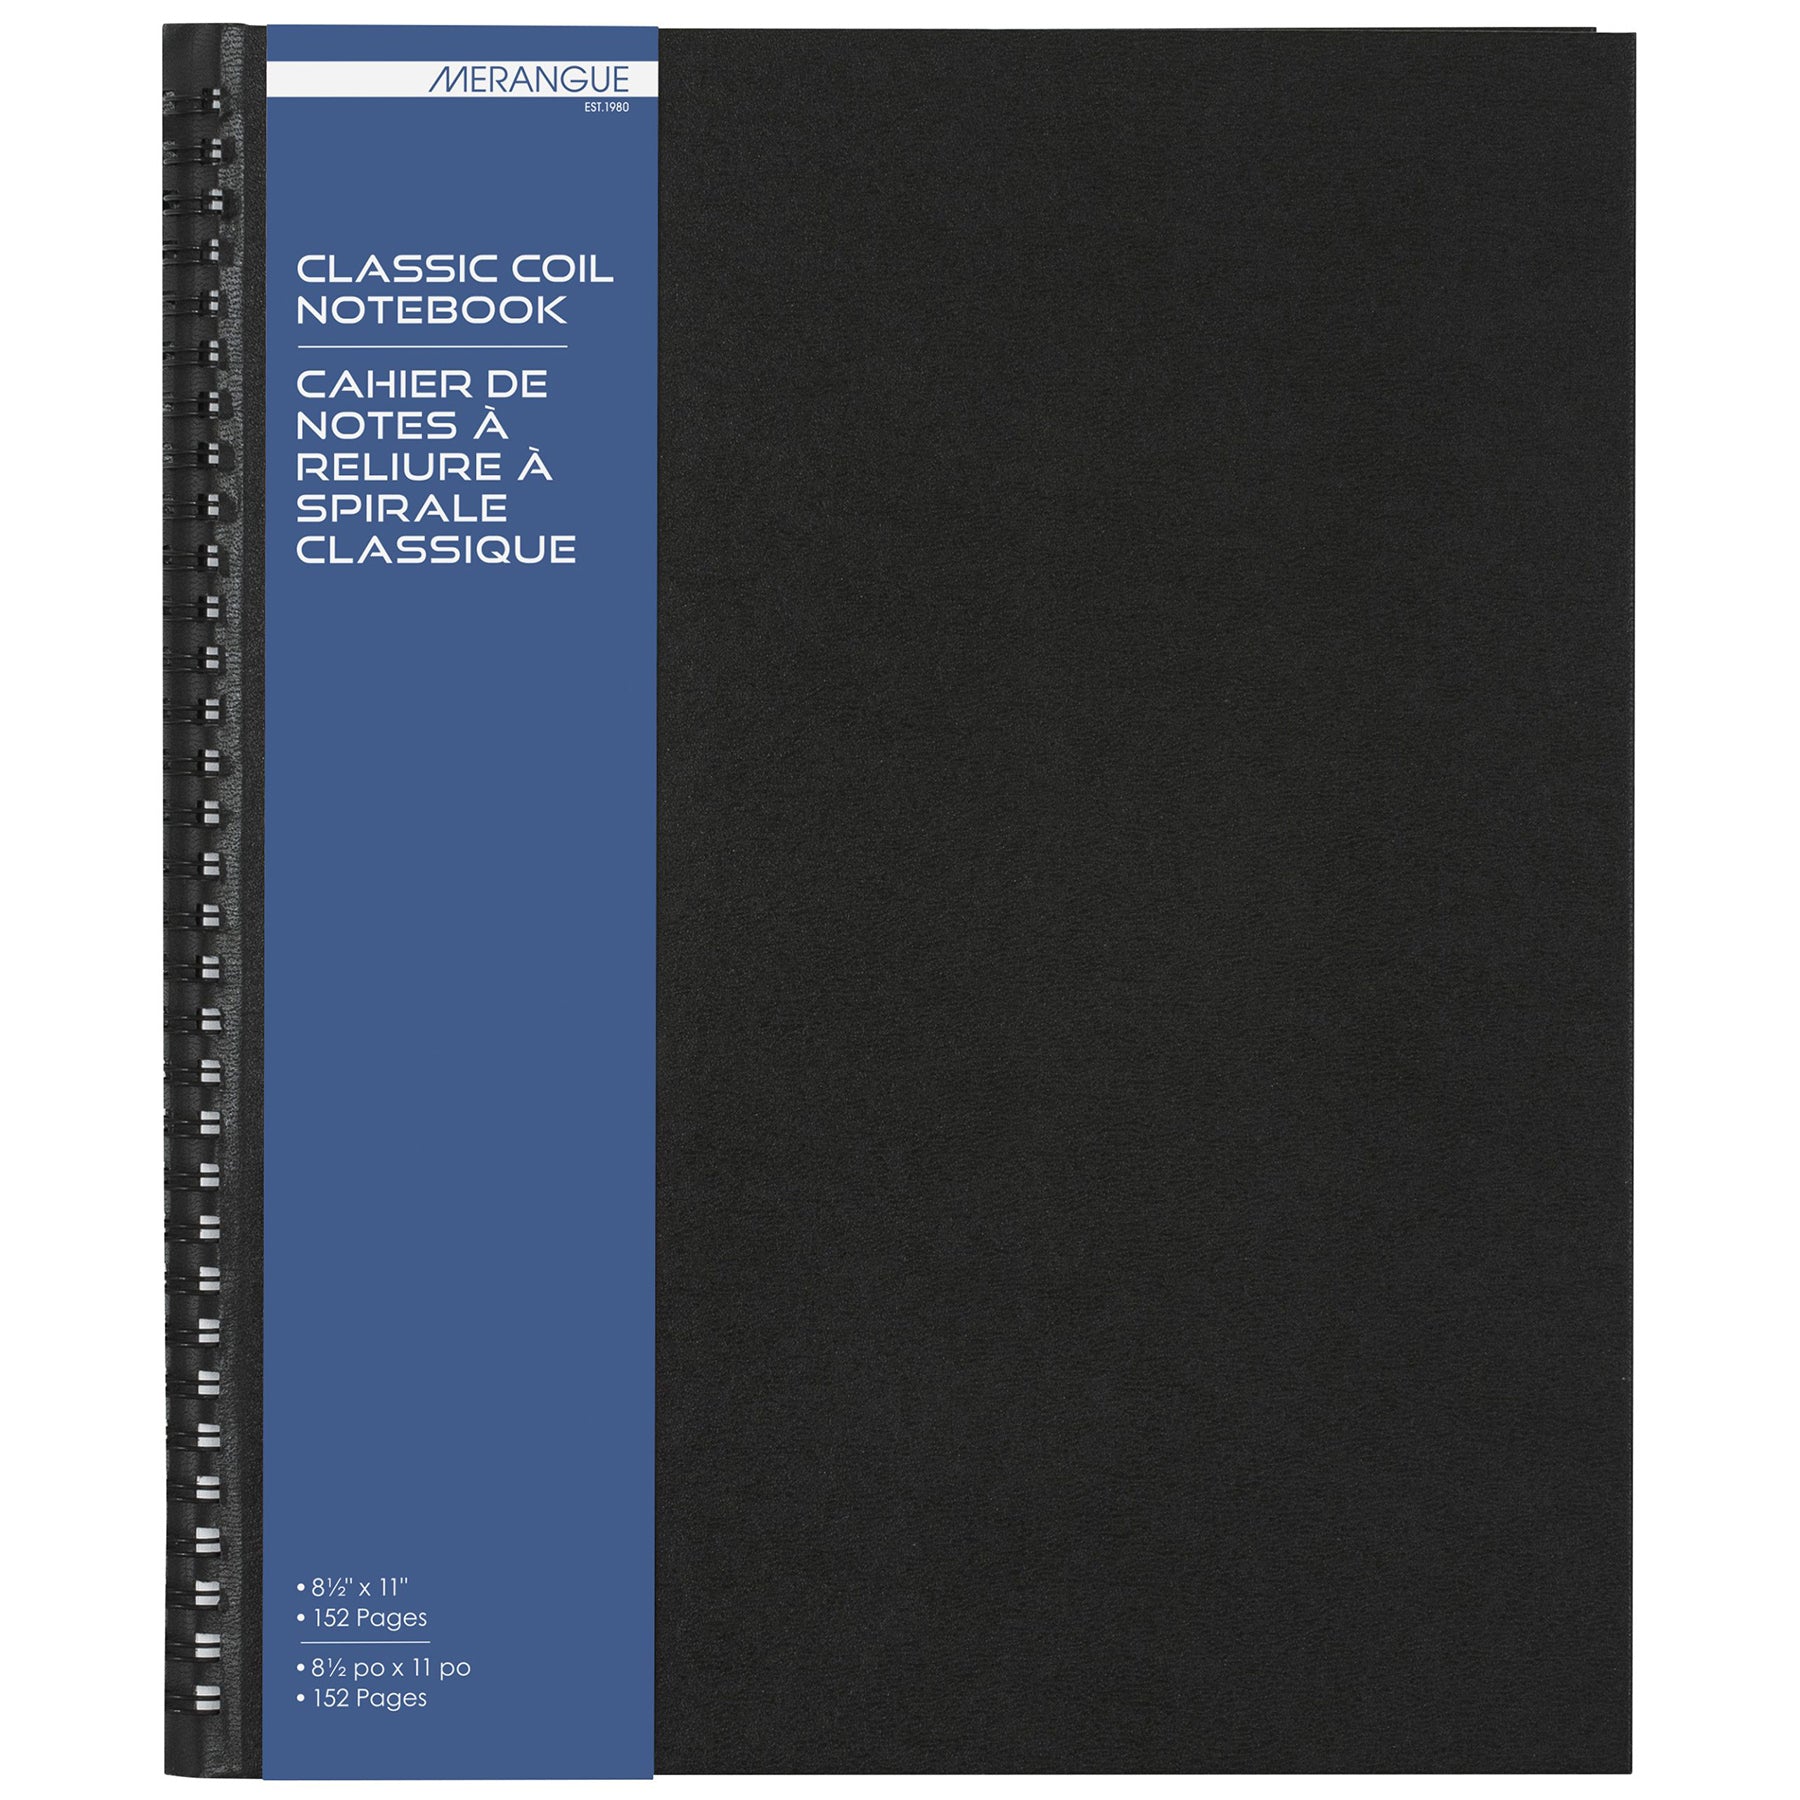 Carnet budget à spirales a5 - 192 pages - bleu marine bleu roi Draeger  Paris